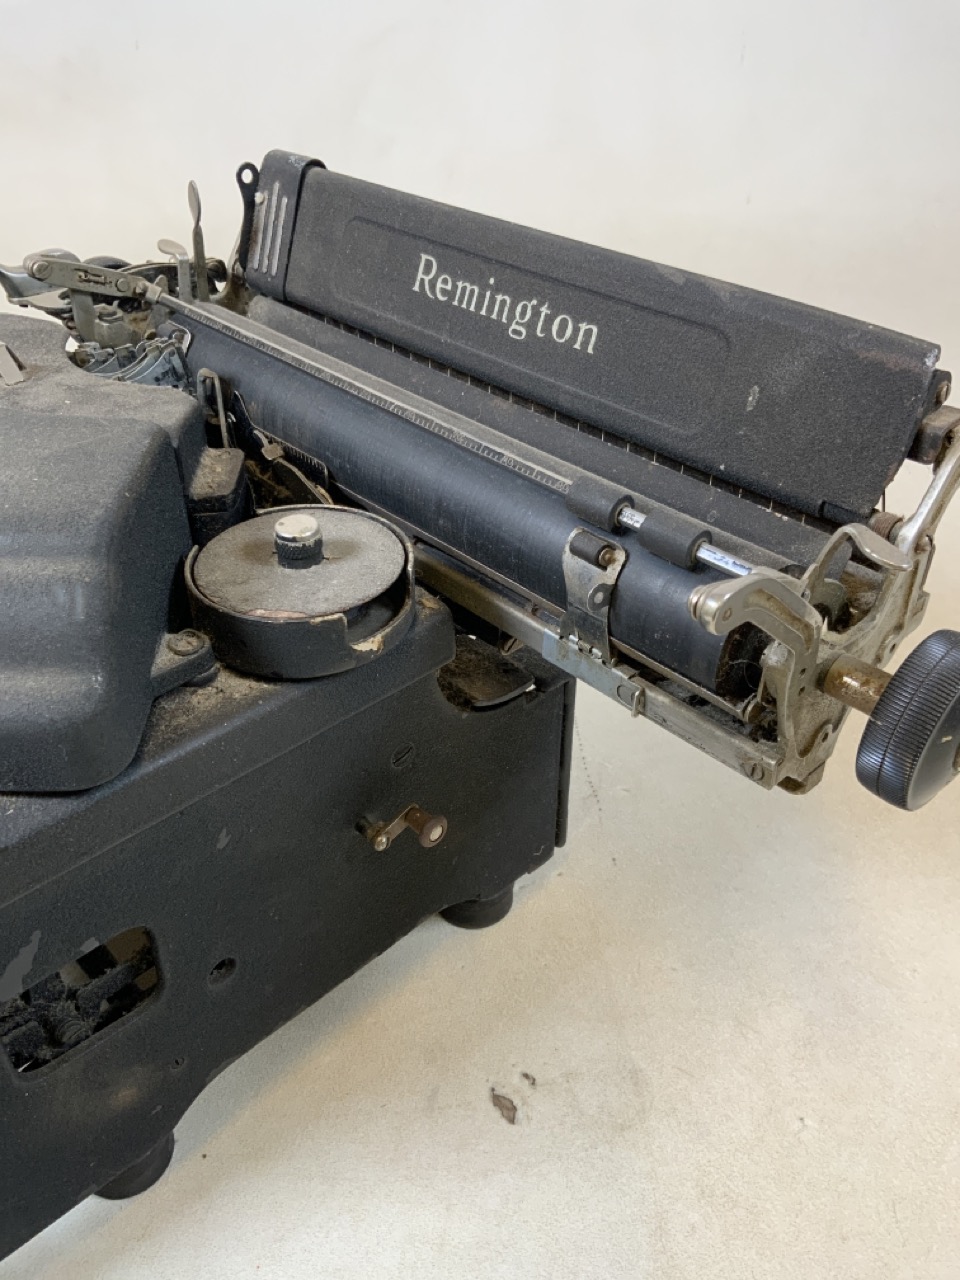 A Remington Noiseless typewriter. - Image 4 of 5